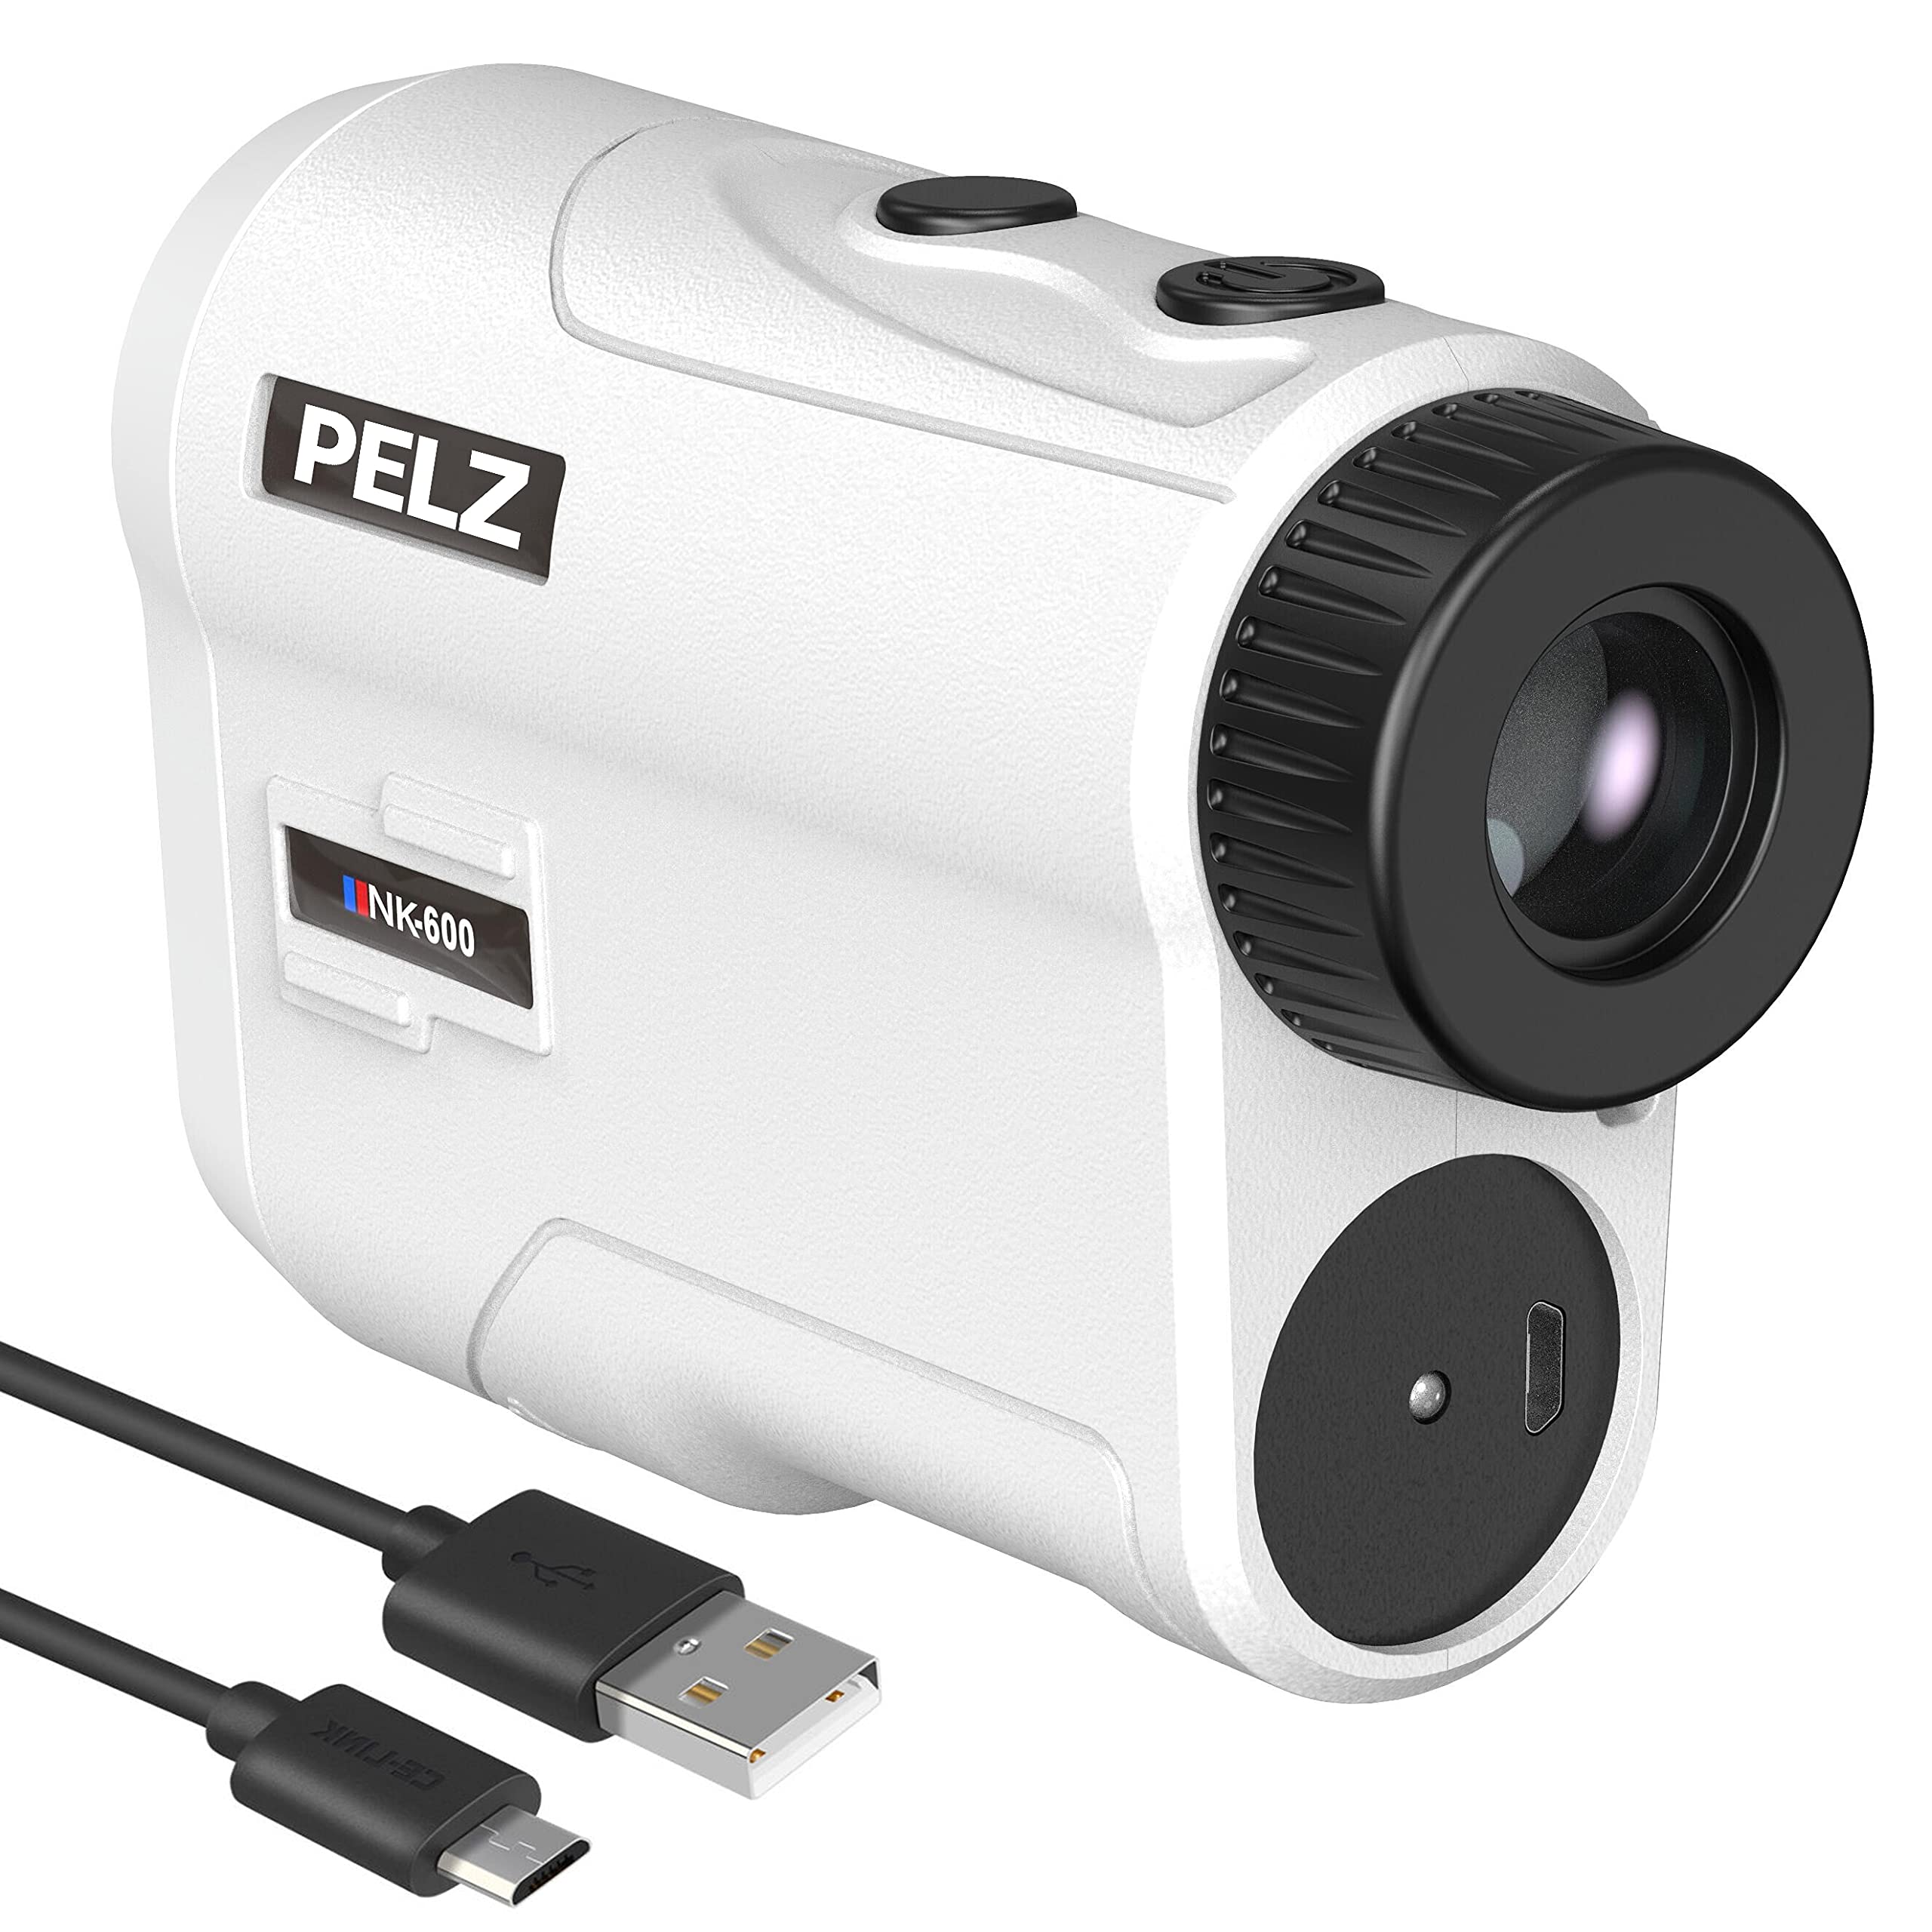 PELZ ゴルフ 距離計 保証2年 充電式 超軽型660yd対応 振動アラーム付き 光学6倍望遠 IP54防水仕様 高低差測定ON/OFF 競技対応 角度測定